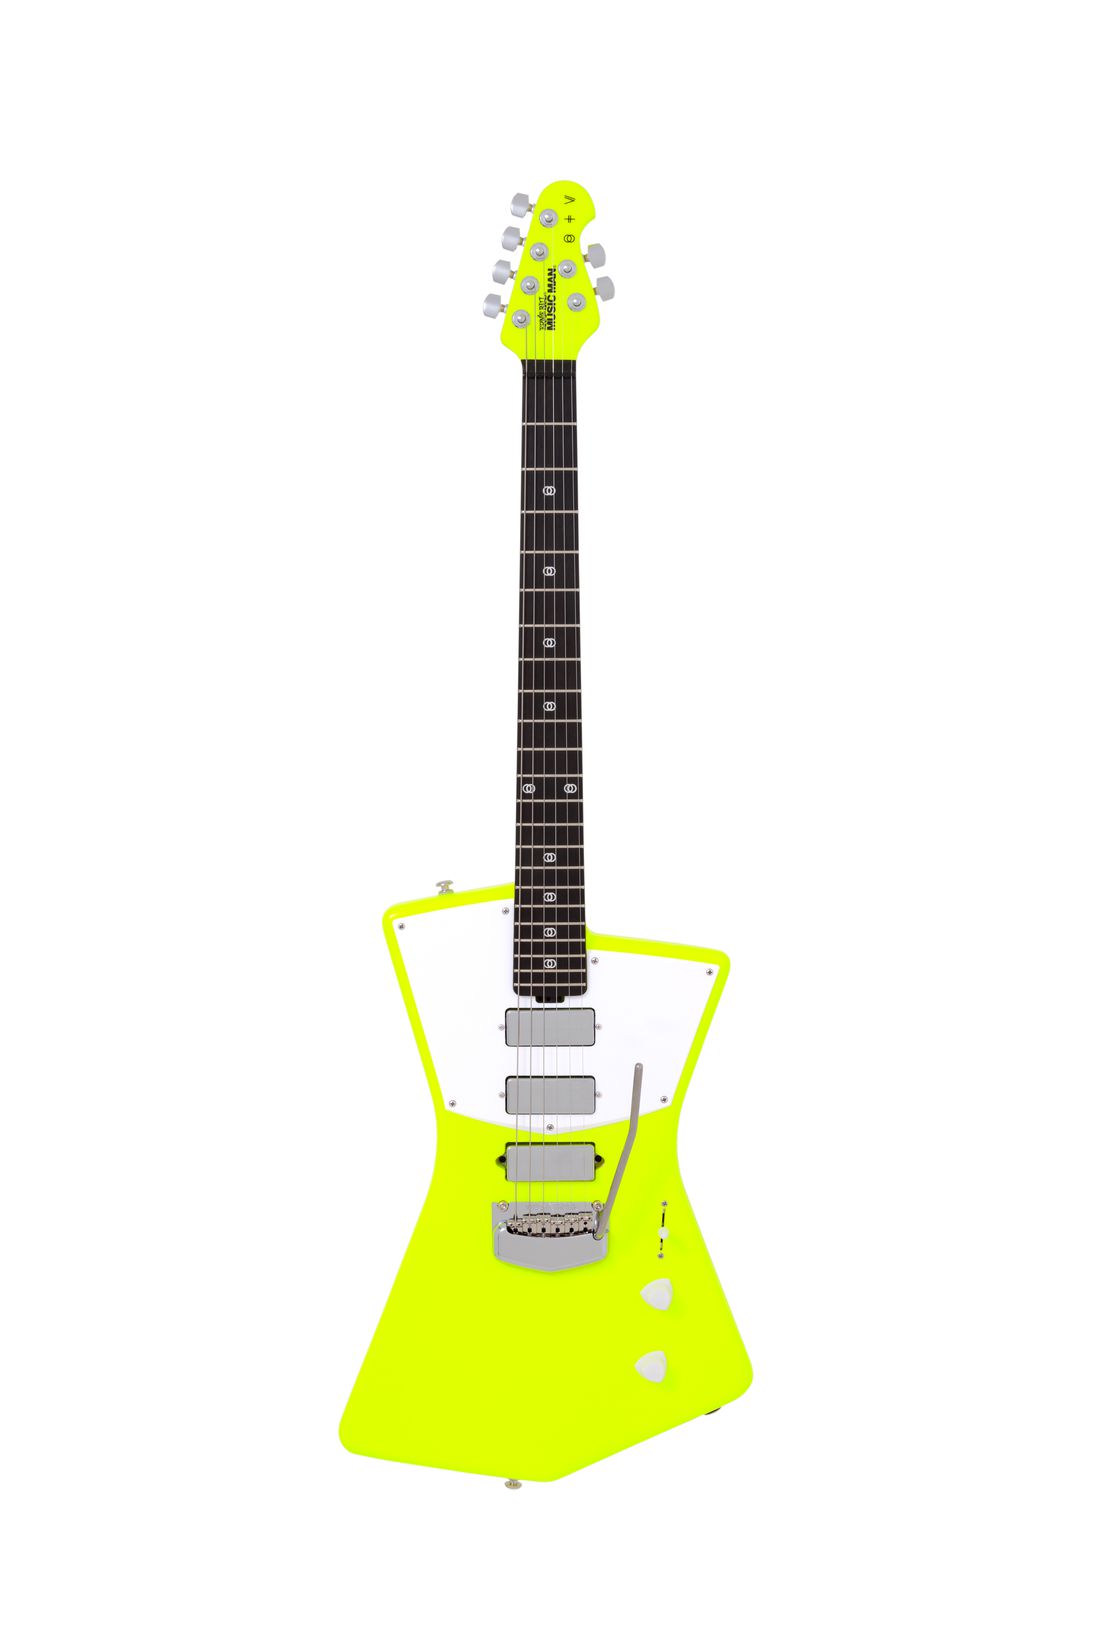 St. Vincent MASSEDUCTION edition electric guitar, used it on her 2017 MASSEDUCTION Tour